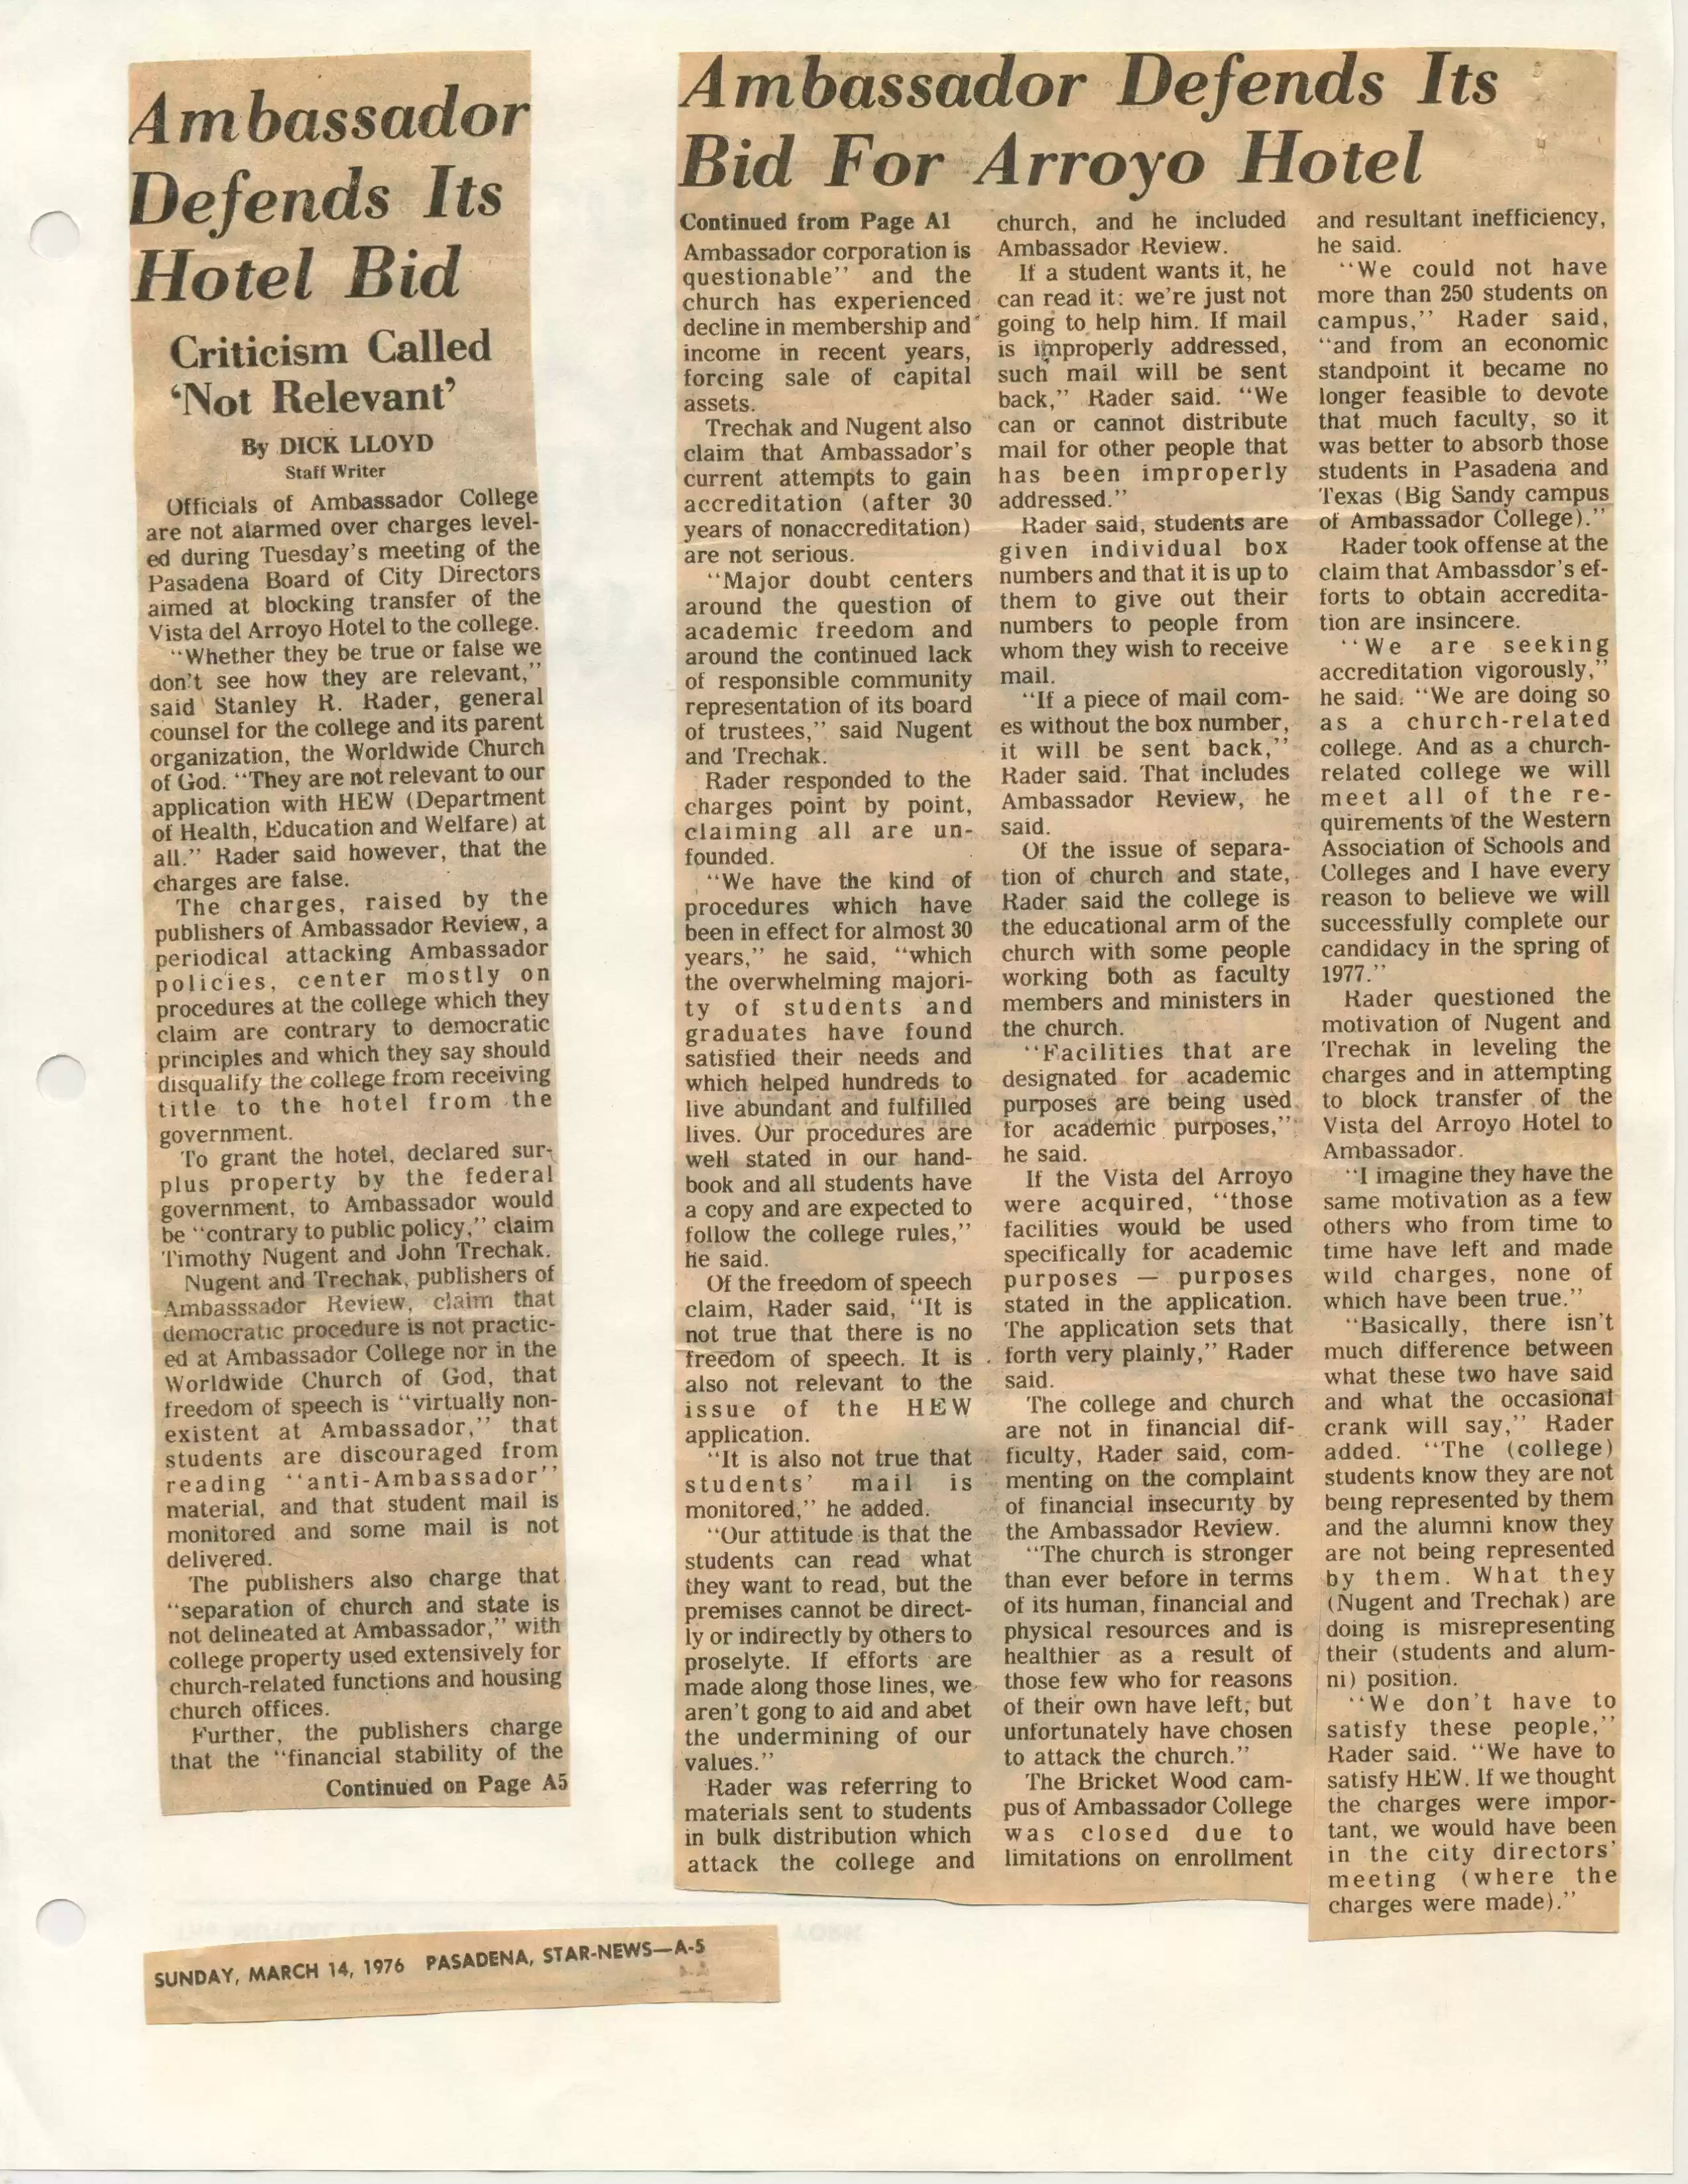 Pasadena Star News, 3-14-76